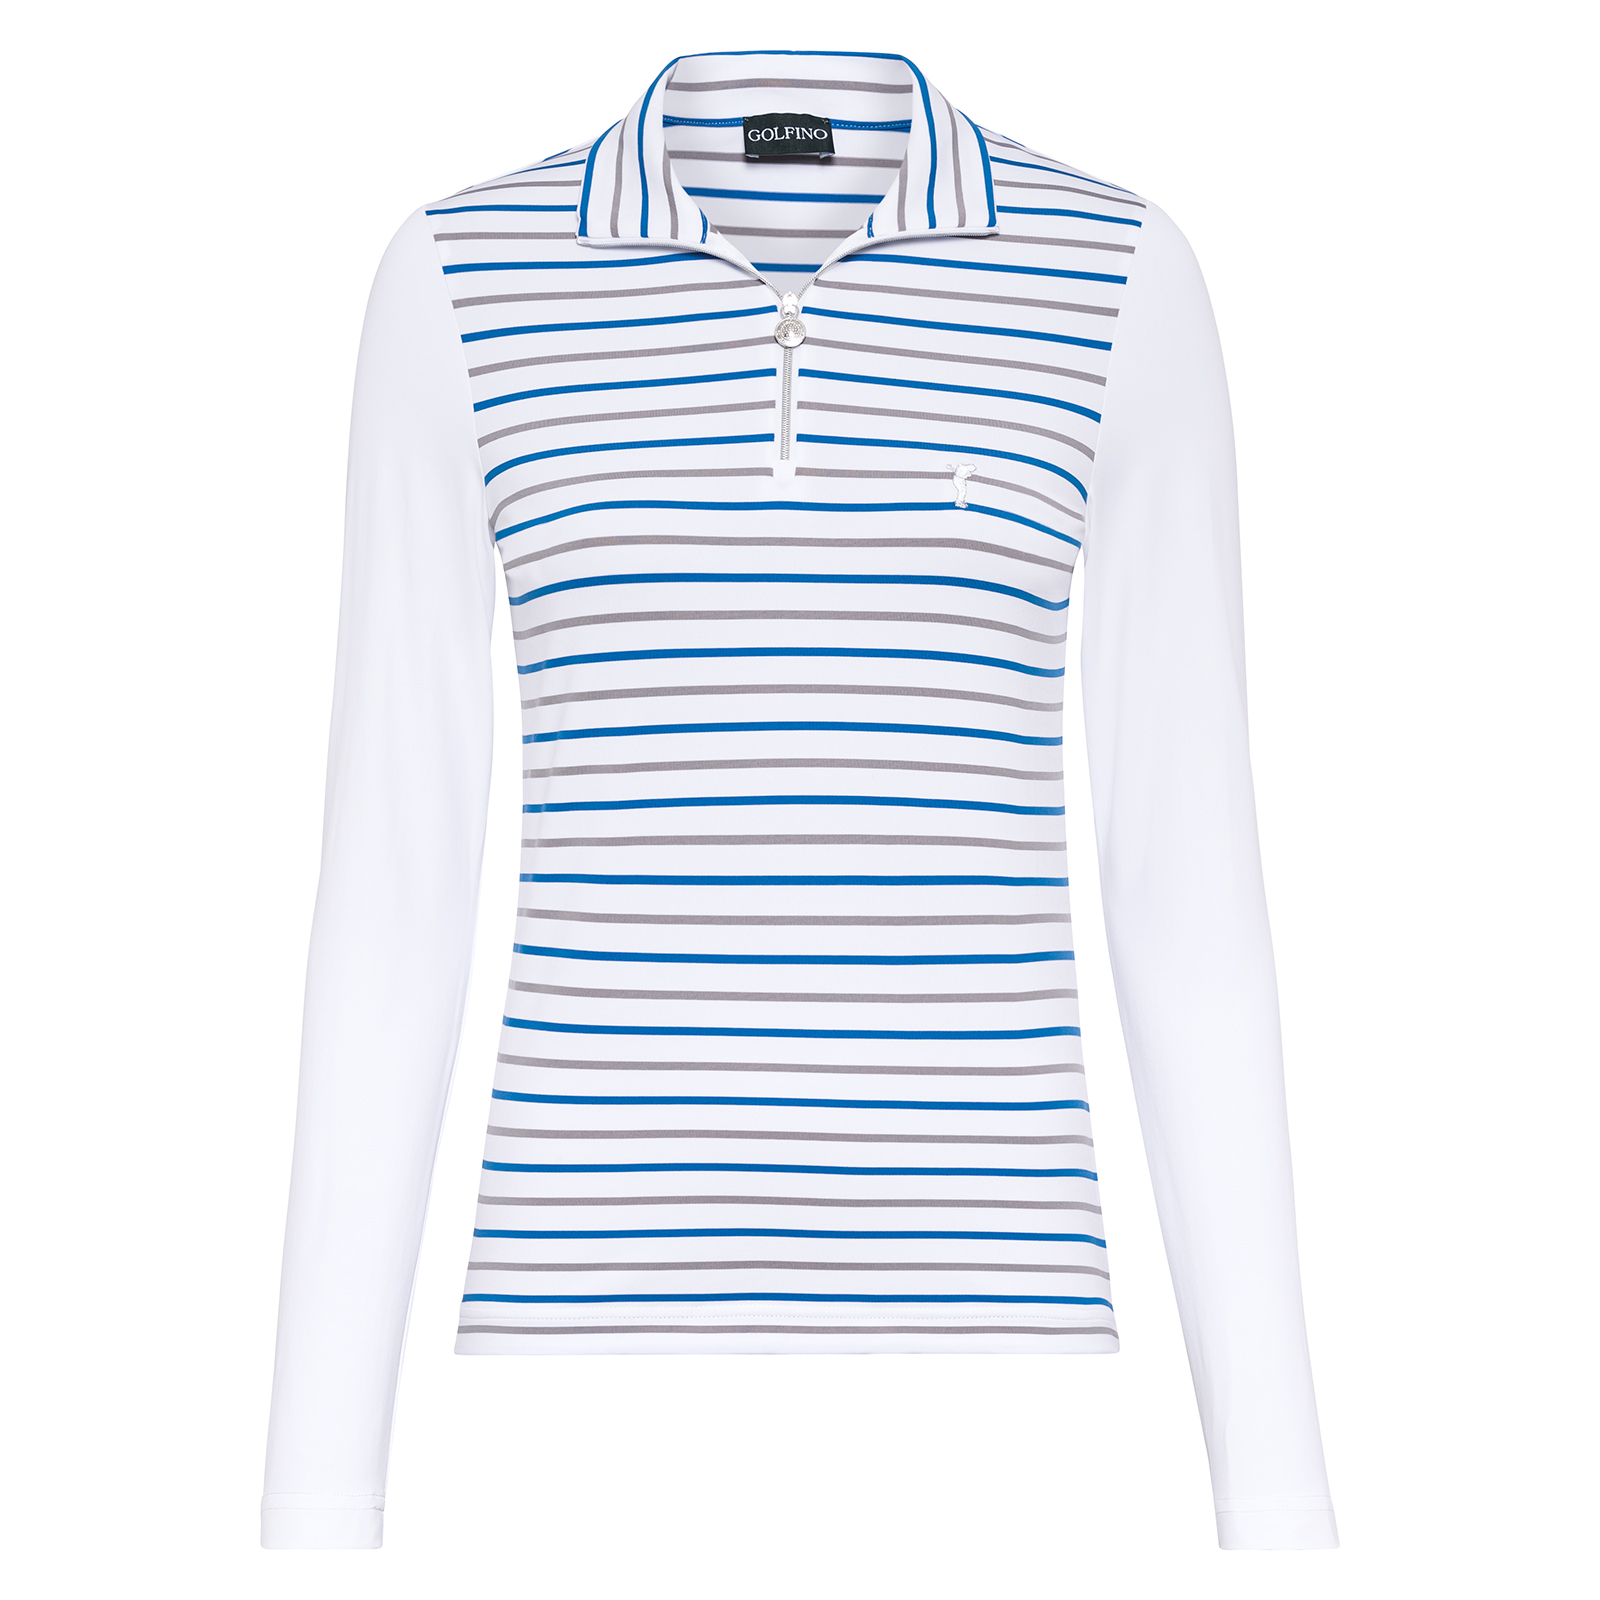 Ladies' light and airy golf shirt 